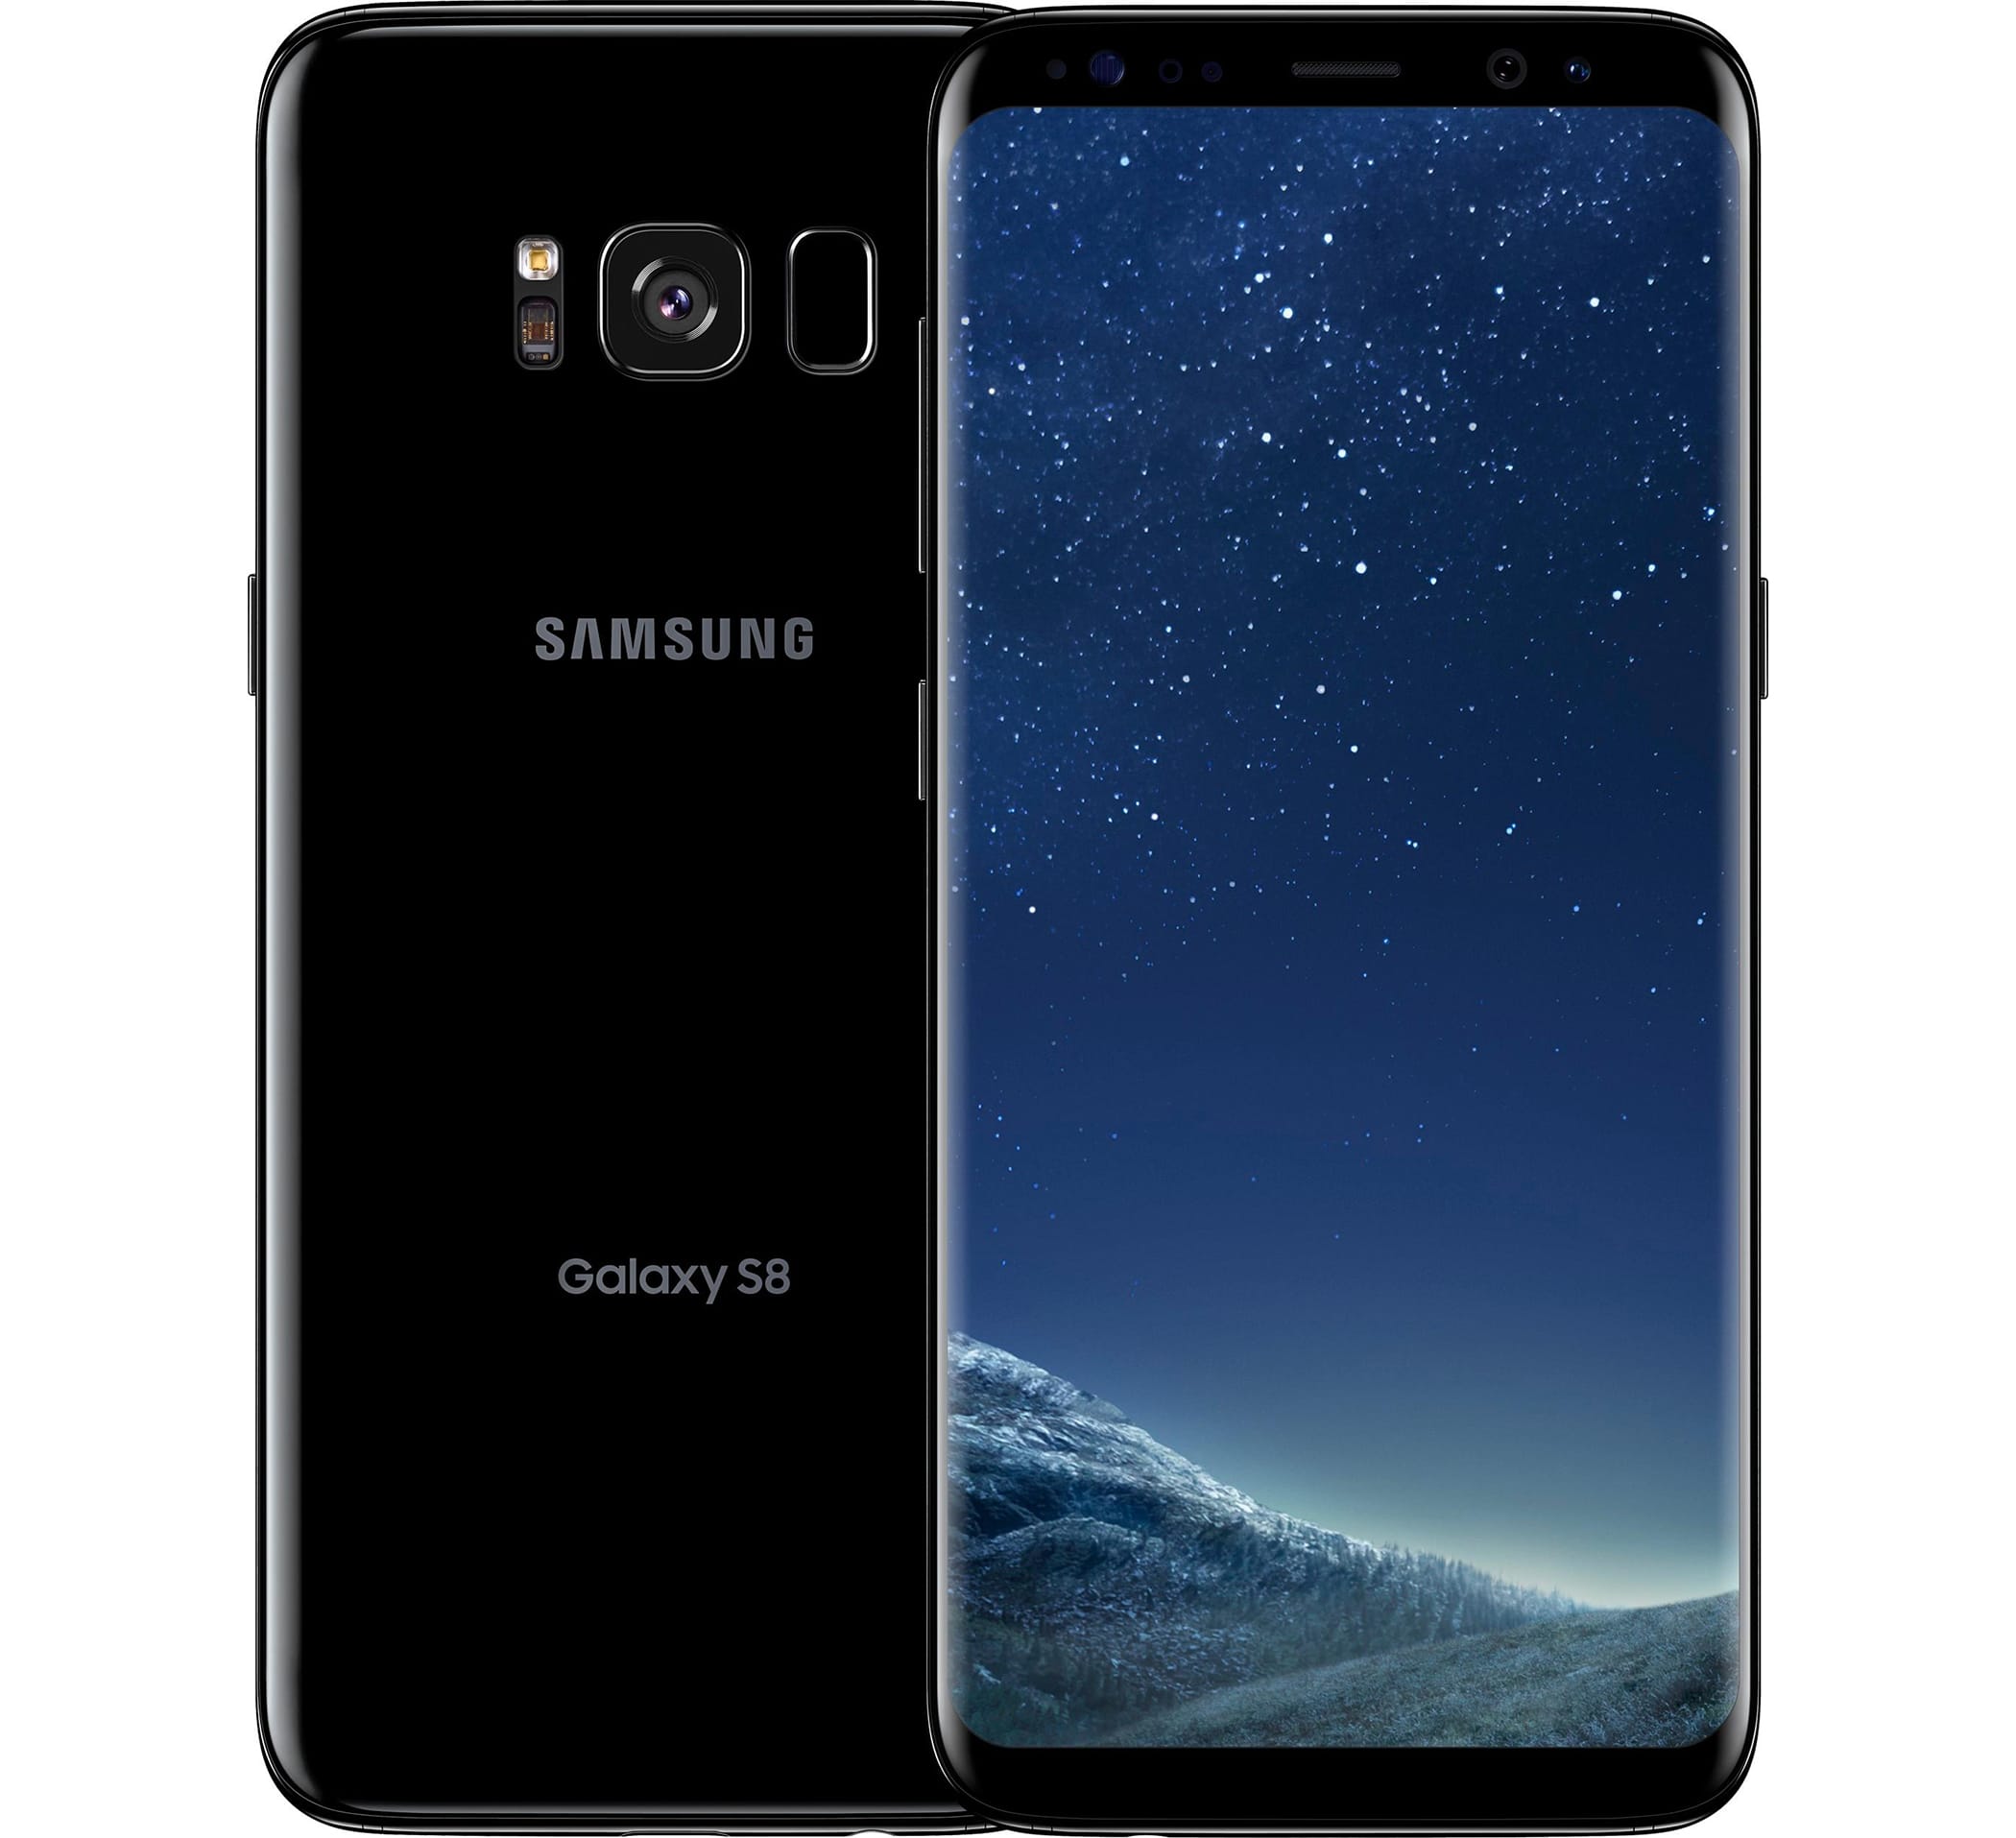 Samsung Galaxy S8 podeshevel tardis33